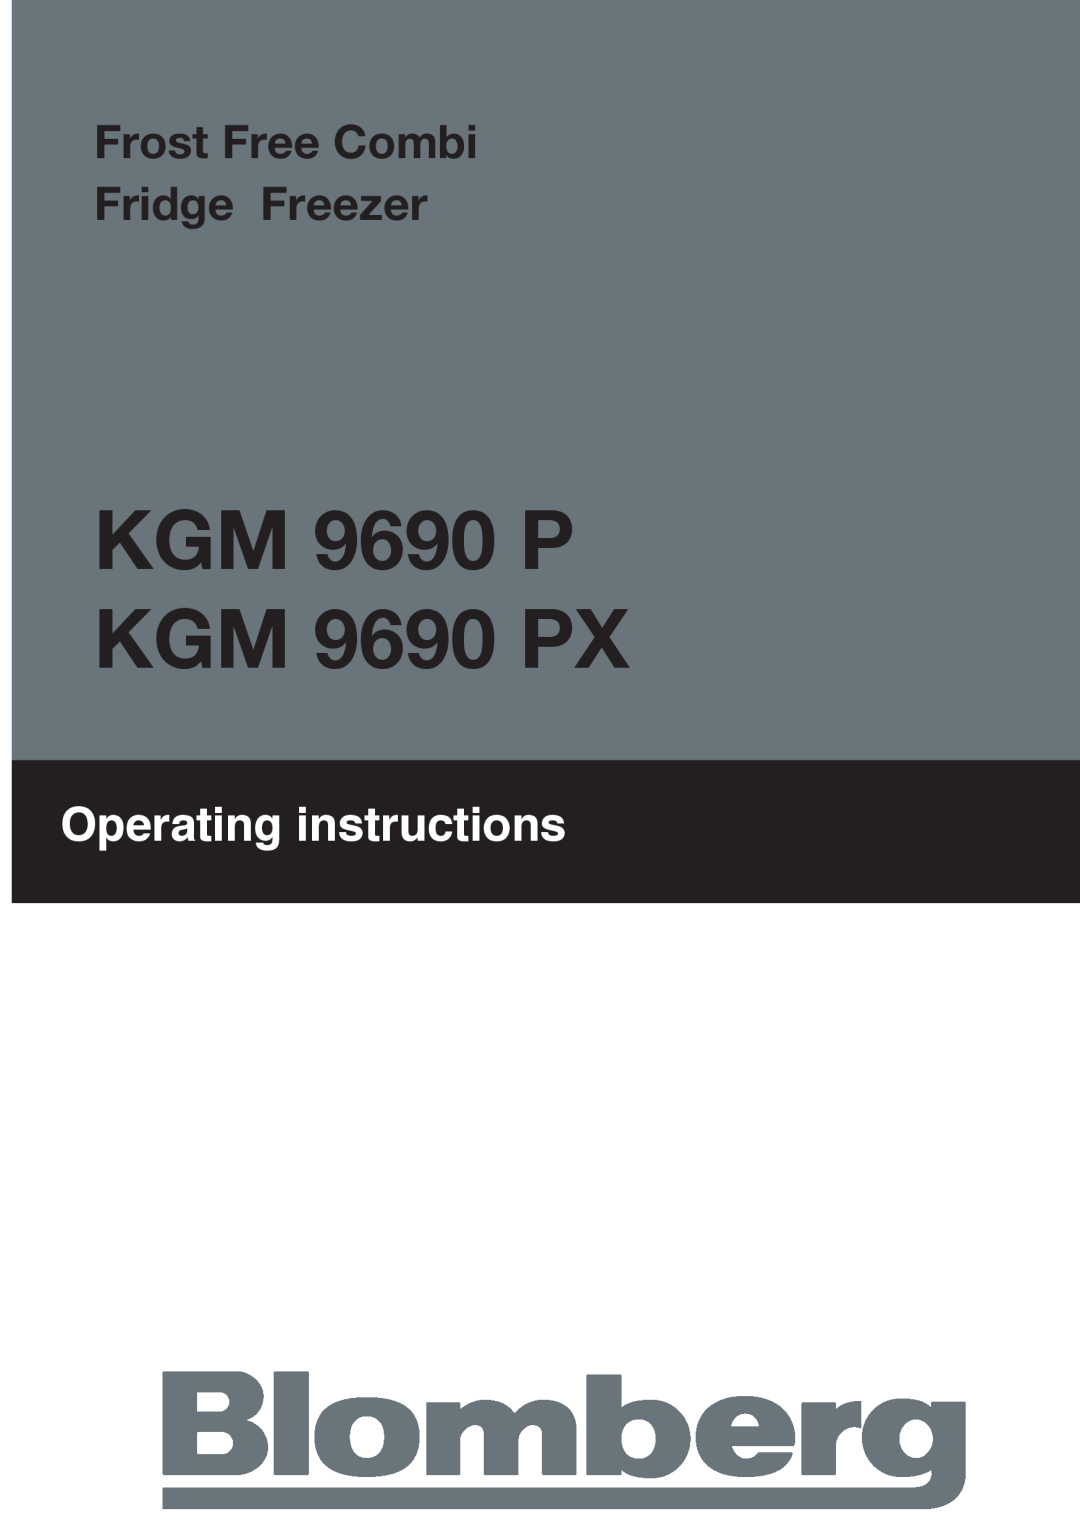 Blomberg manual KGM 9690 P KGM 9690 PX, Frost Free Combi Fridge Freezer, Operating instructions 